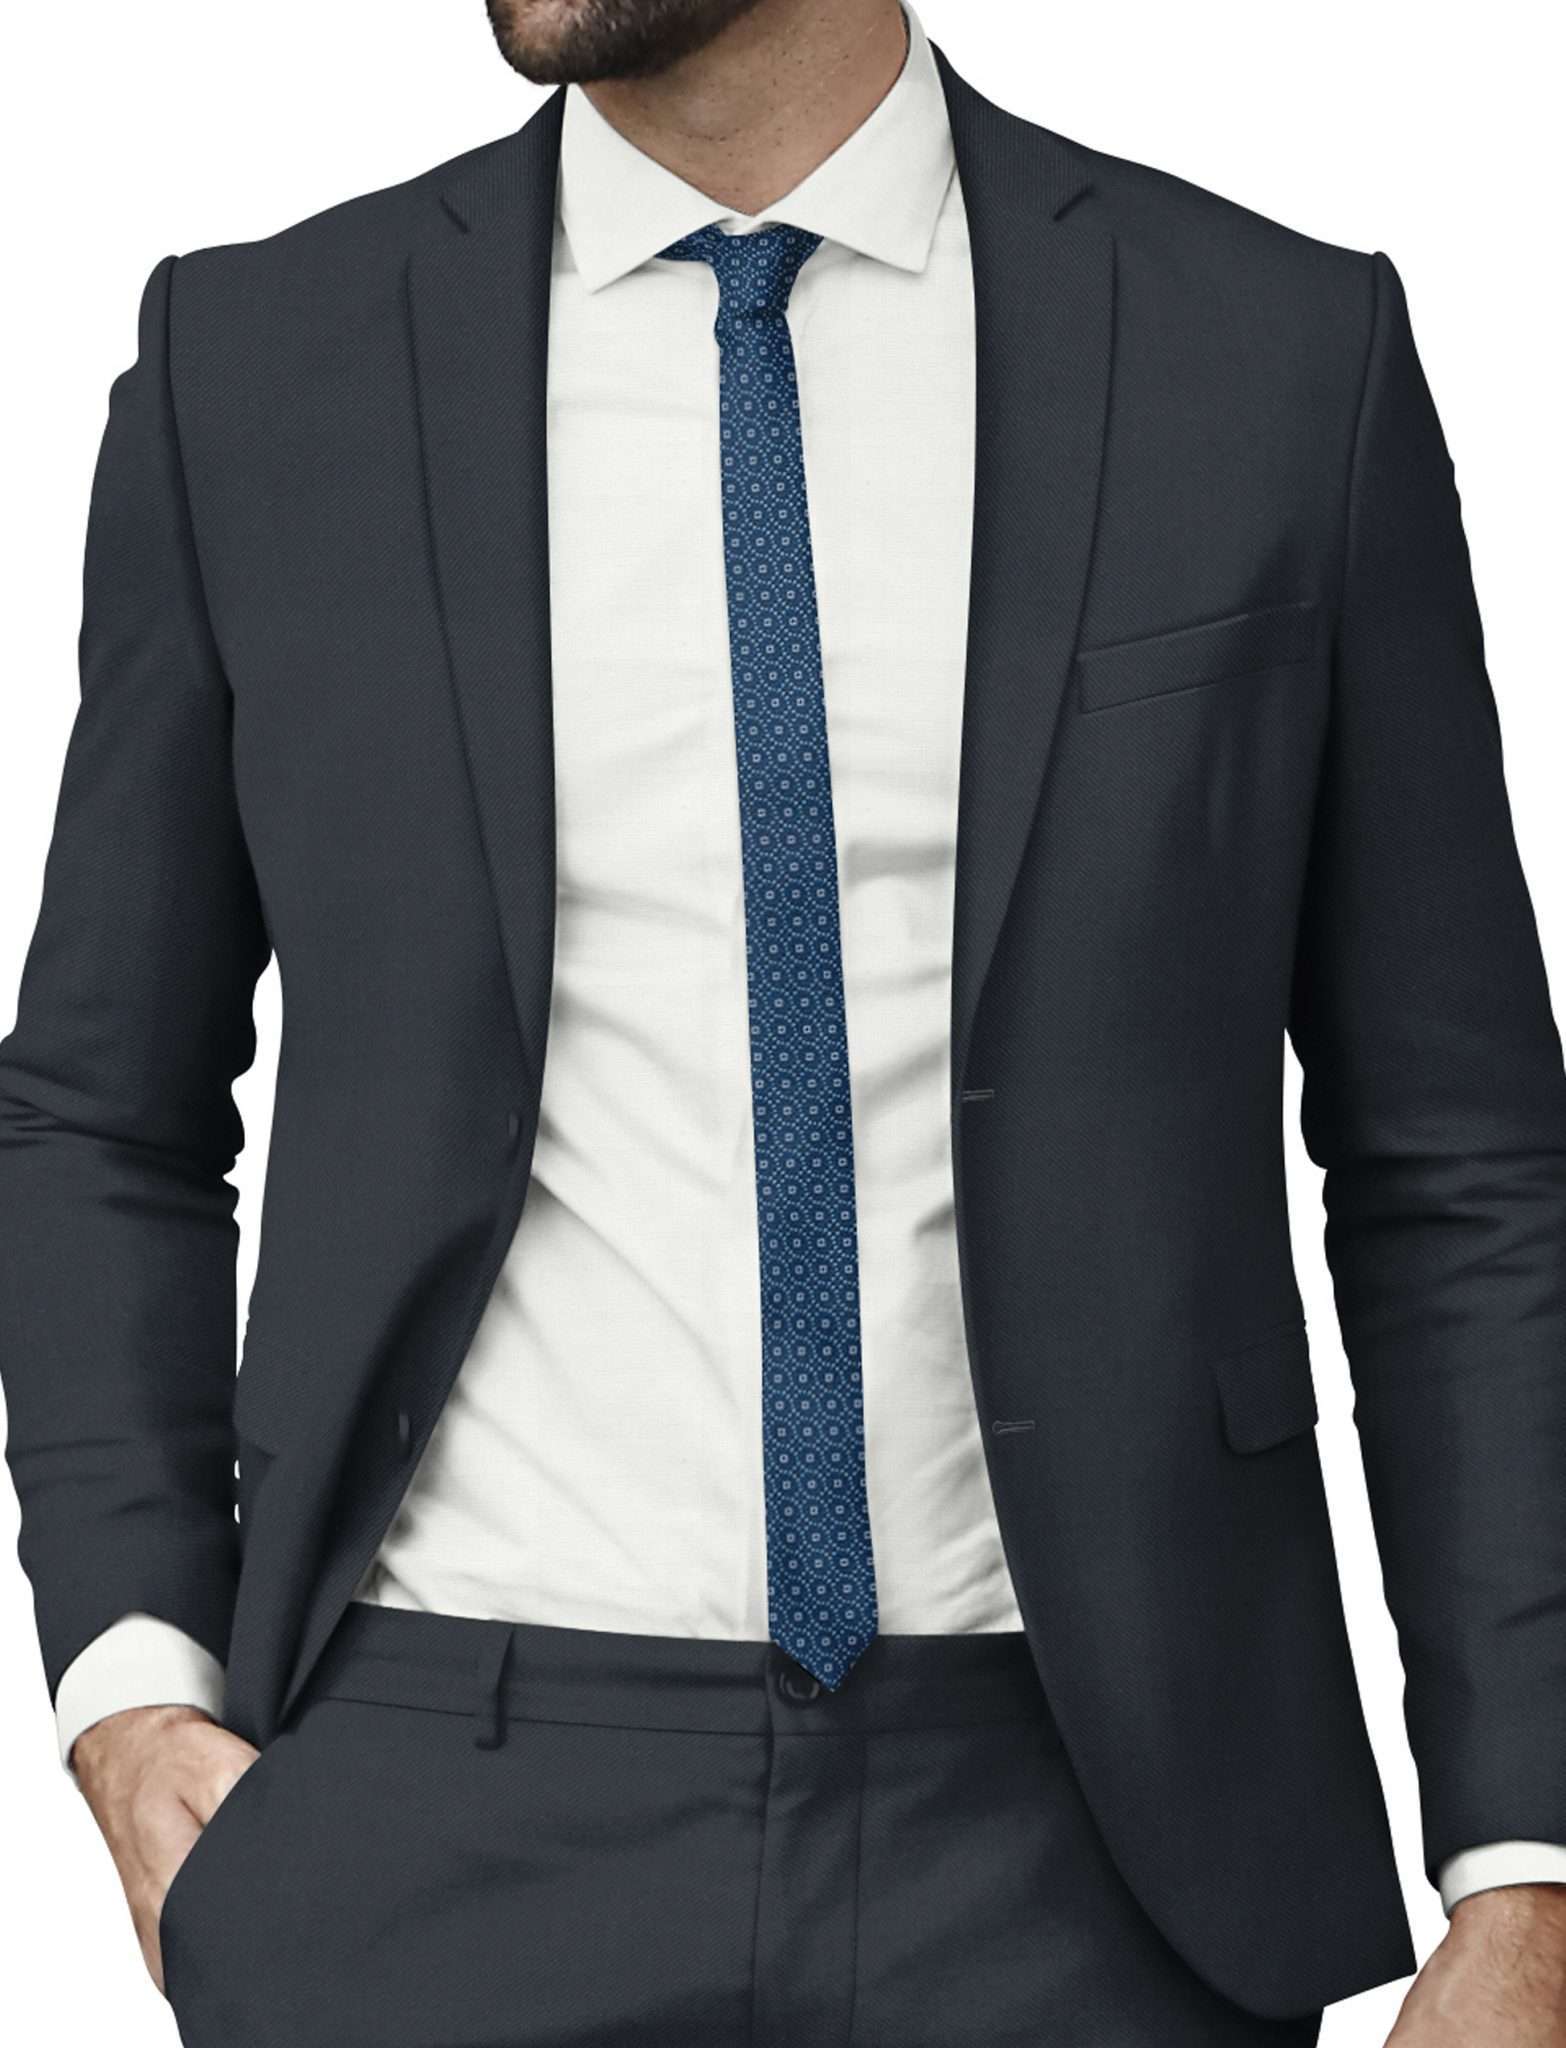 Custom Made Dark Blue Suit Italian Tailored Suit | Starting at 99$